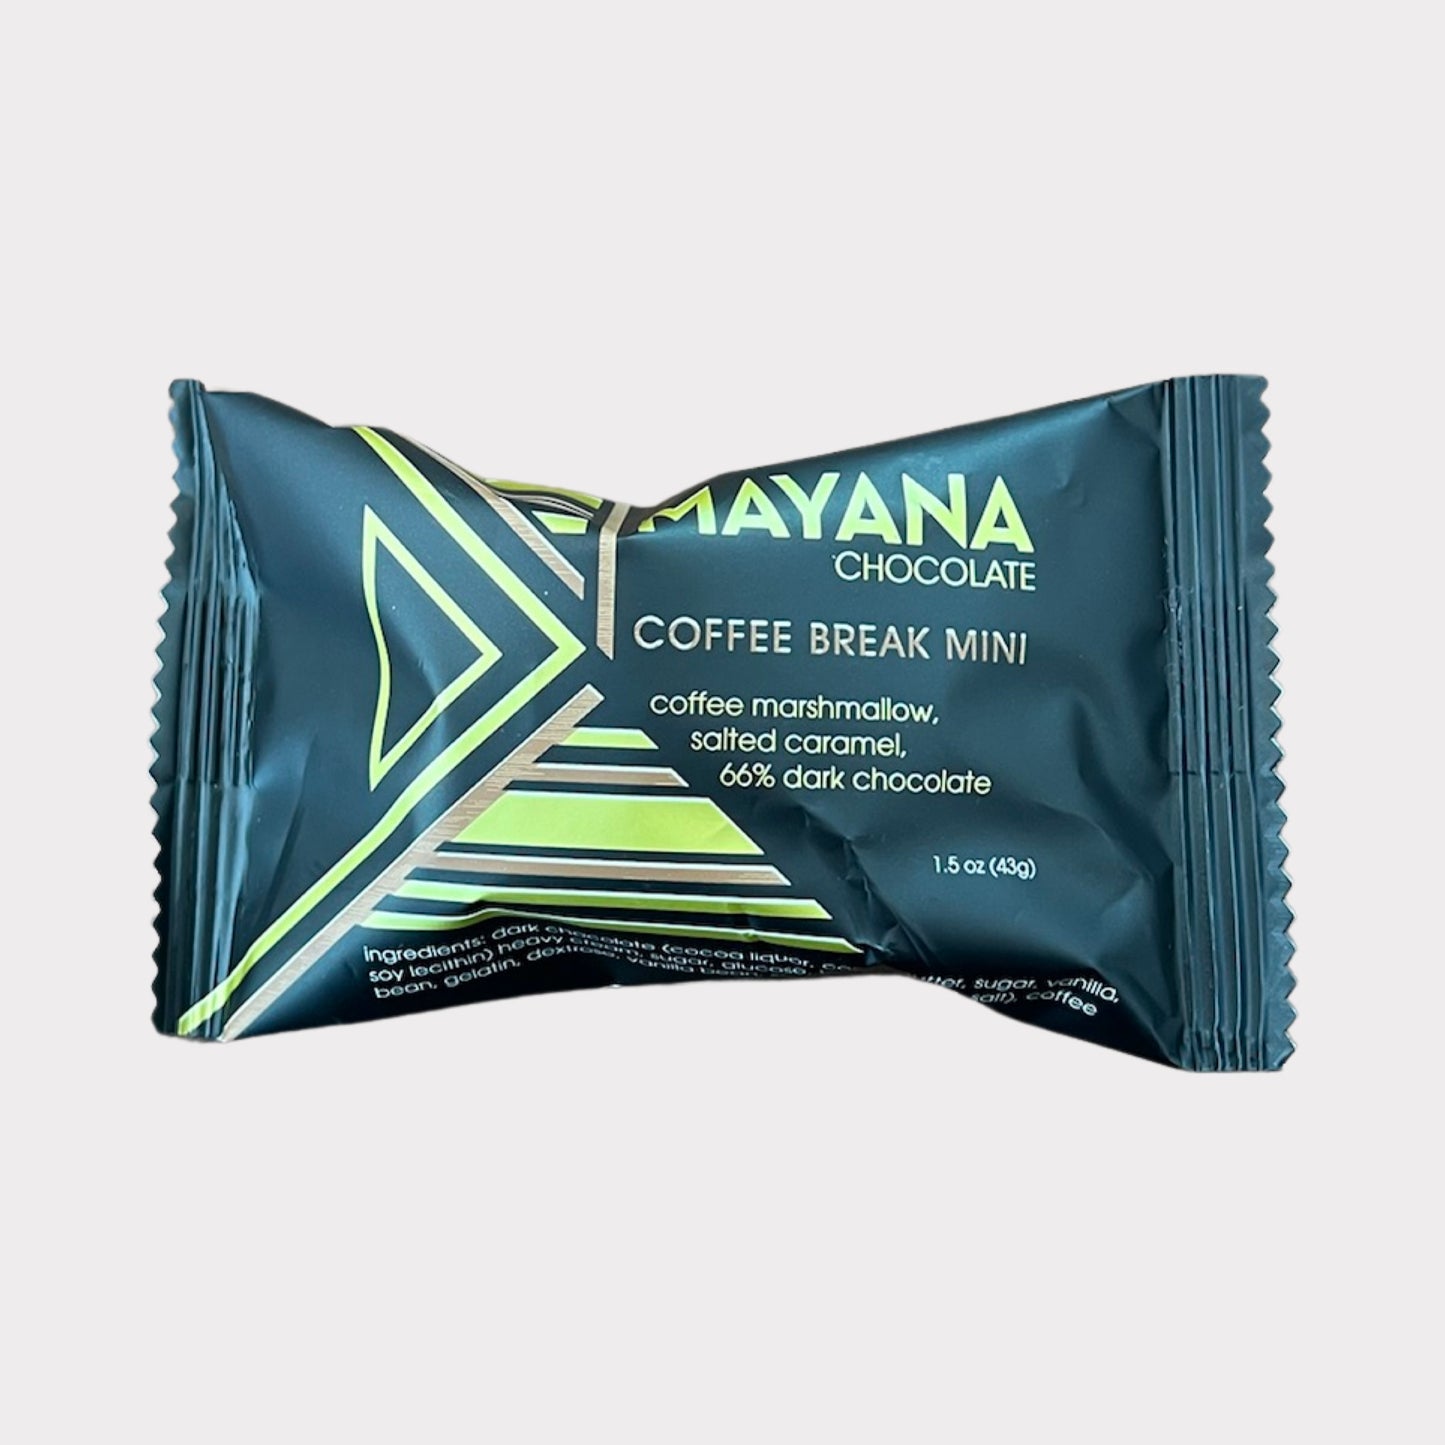 Mayana Coffee Break Mini Bar, 1.5oz